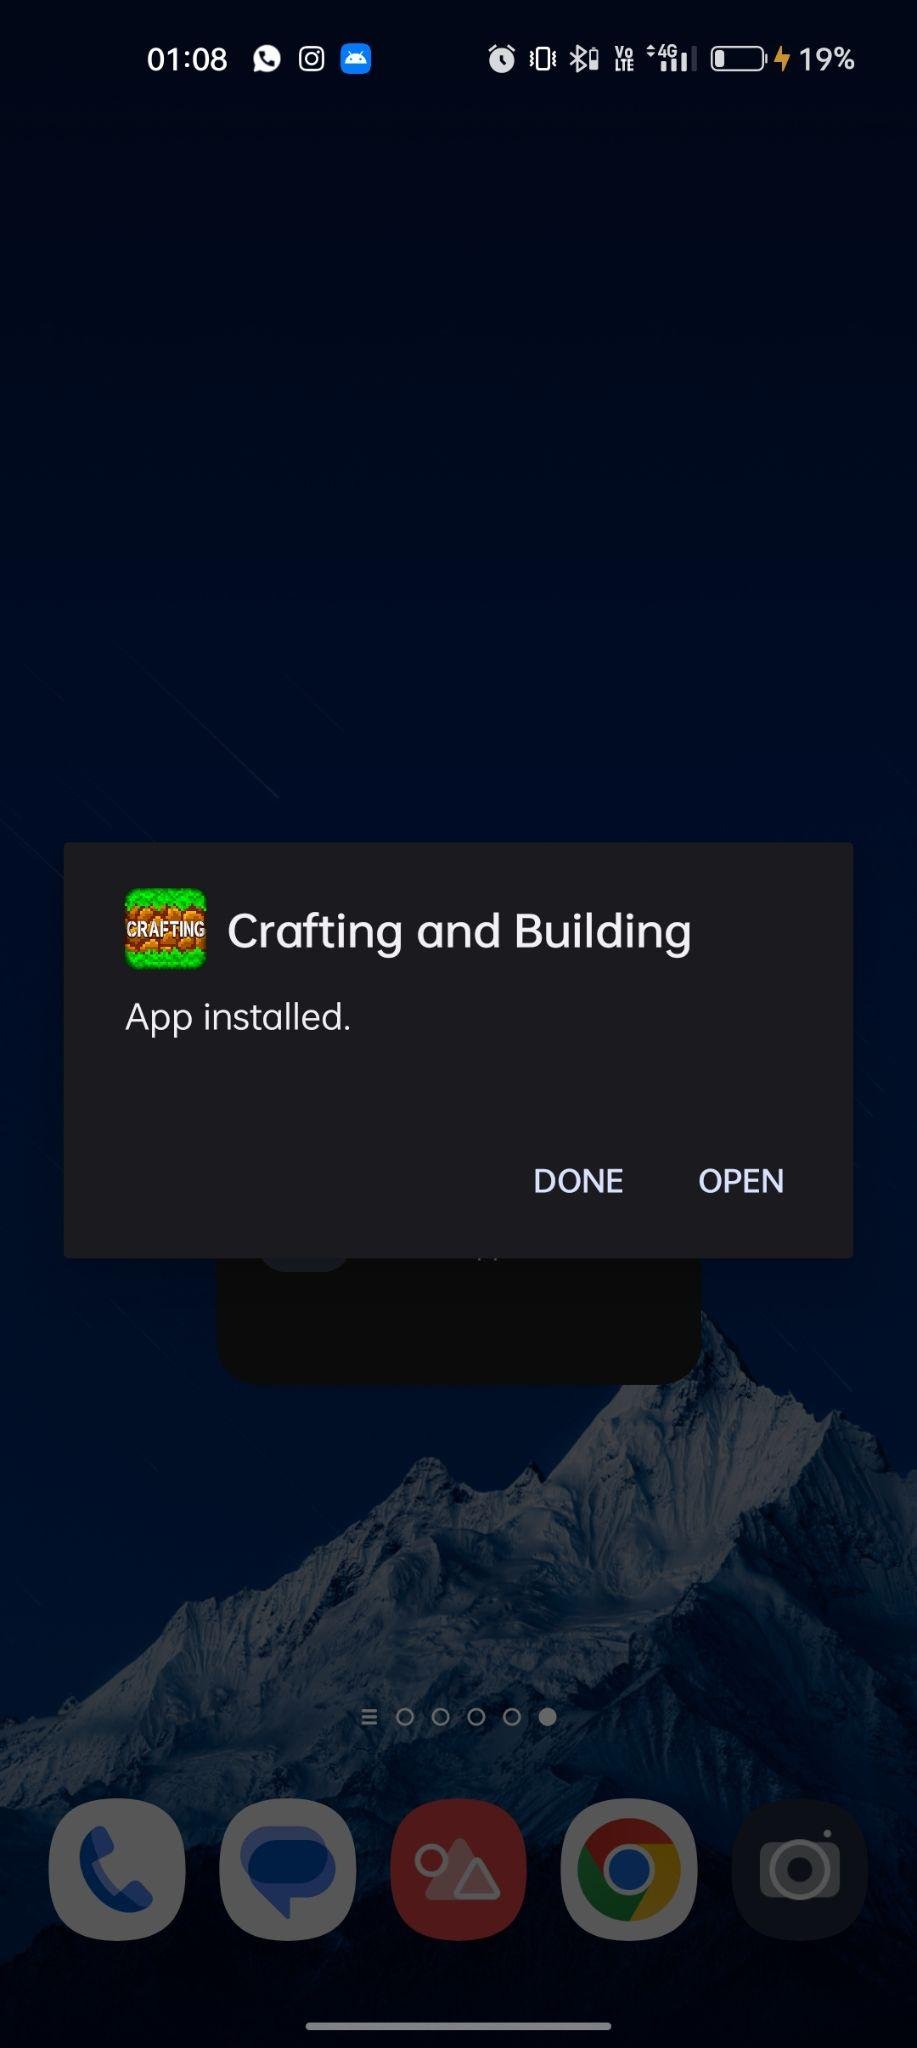 Crafting & Building Apk installed